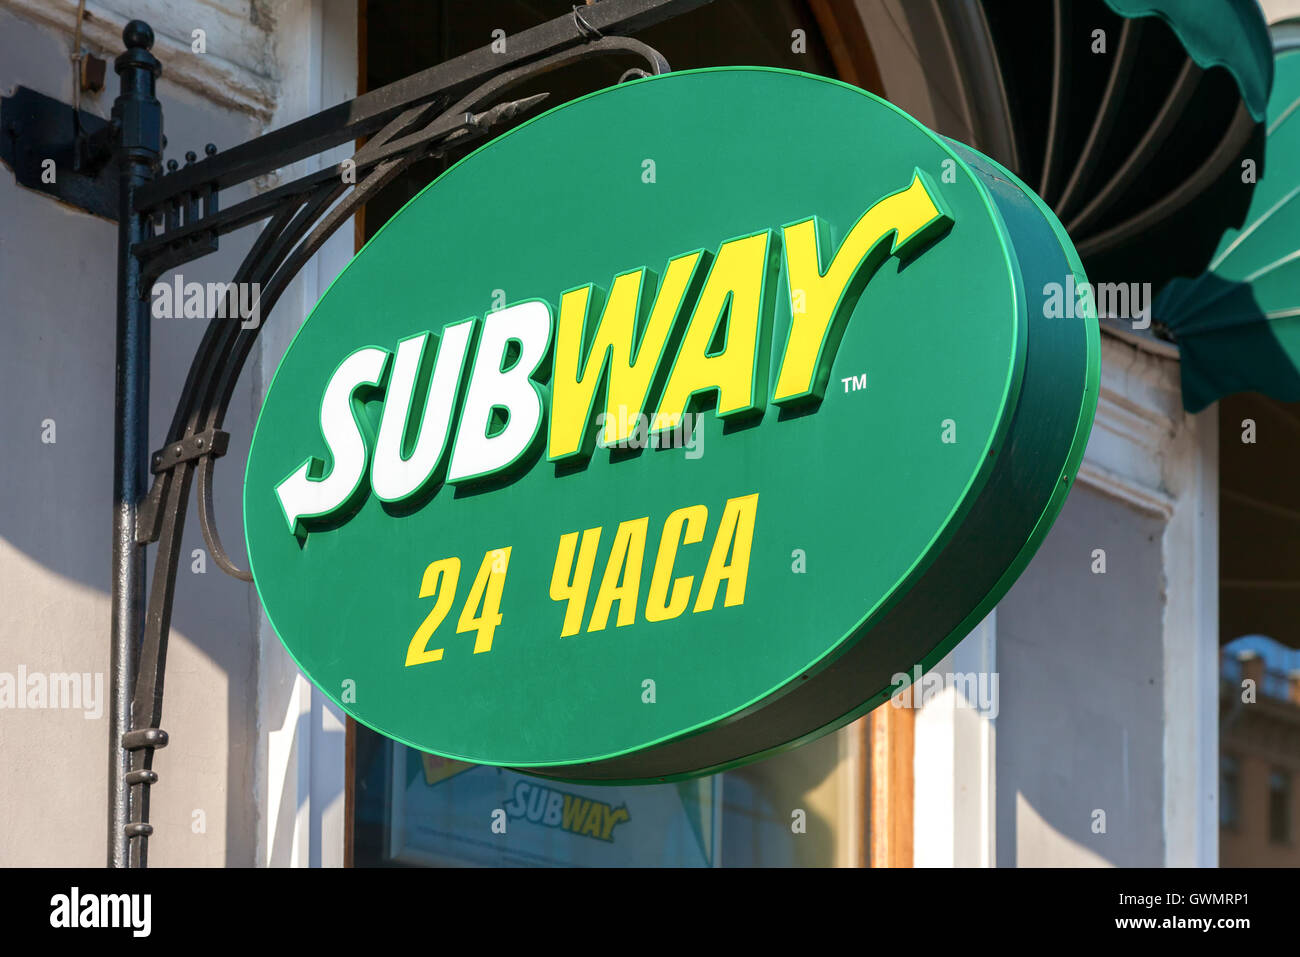 Subway fast food restaurant sign Stock Photo